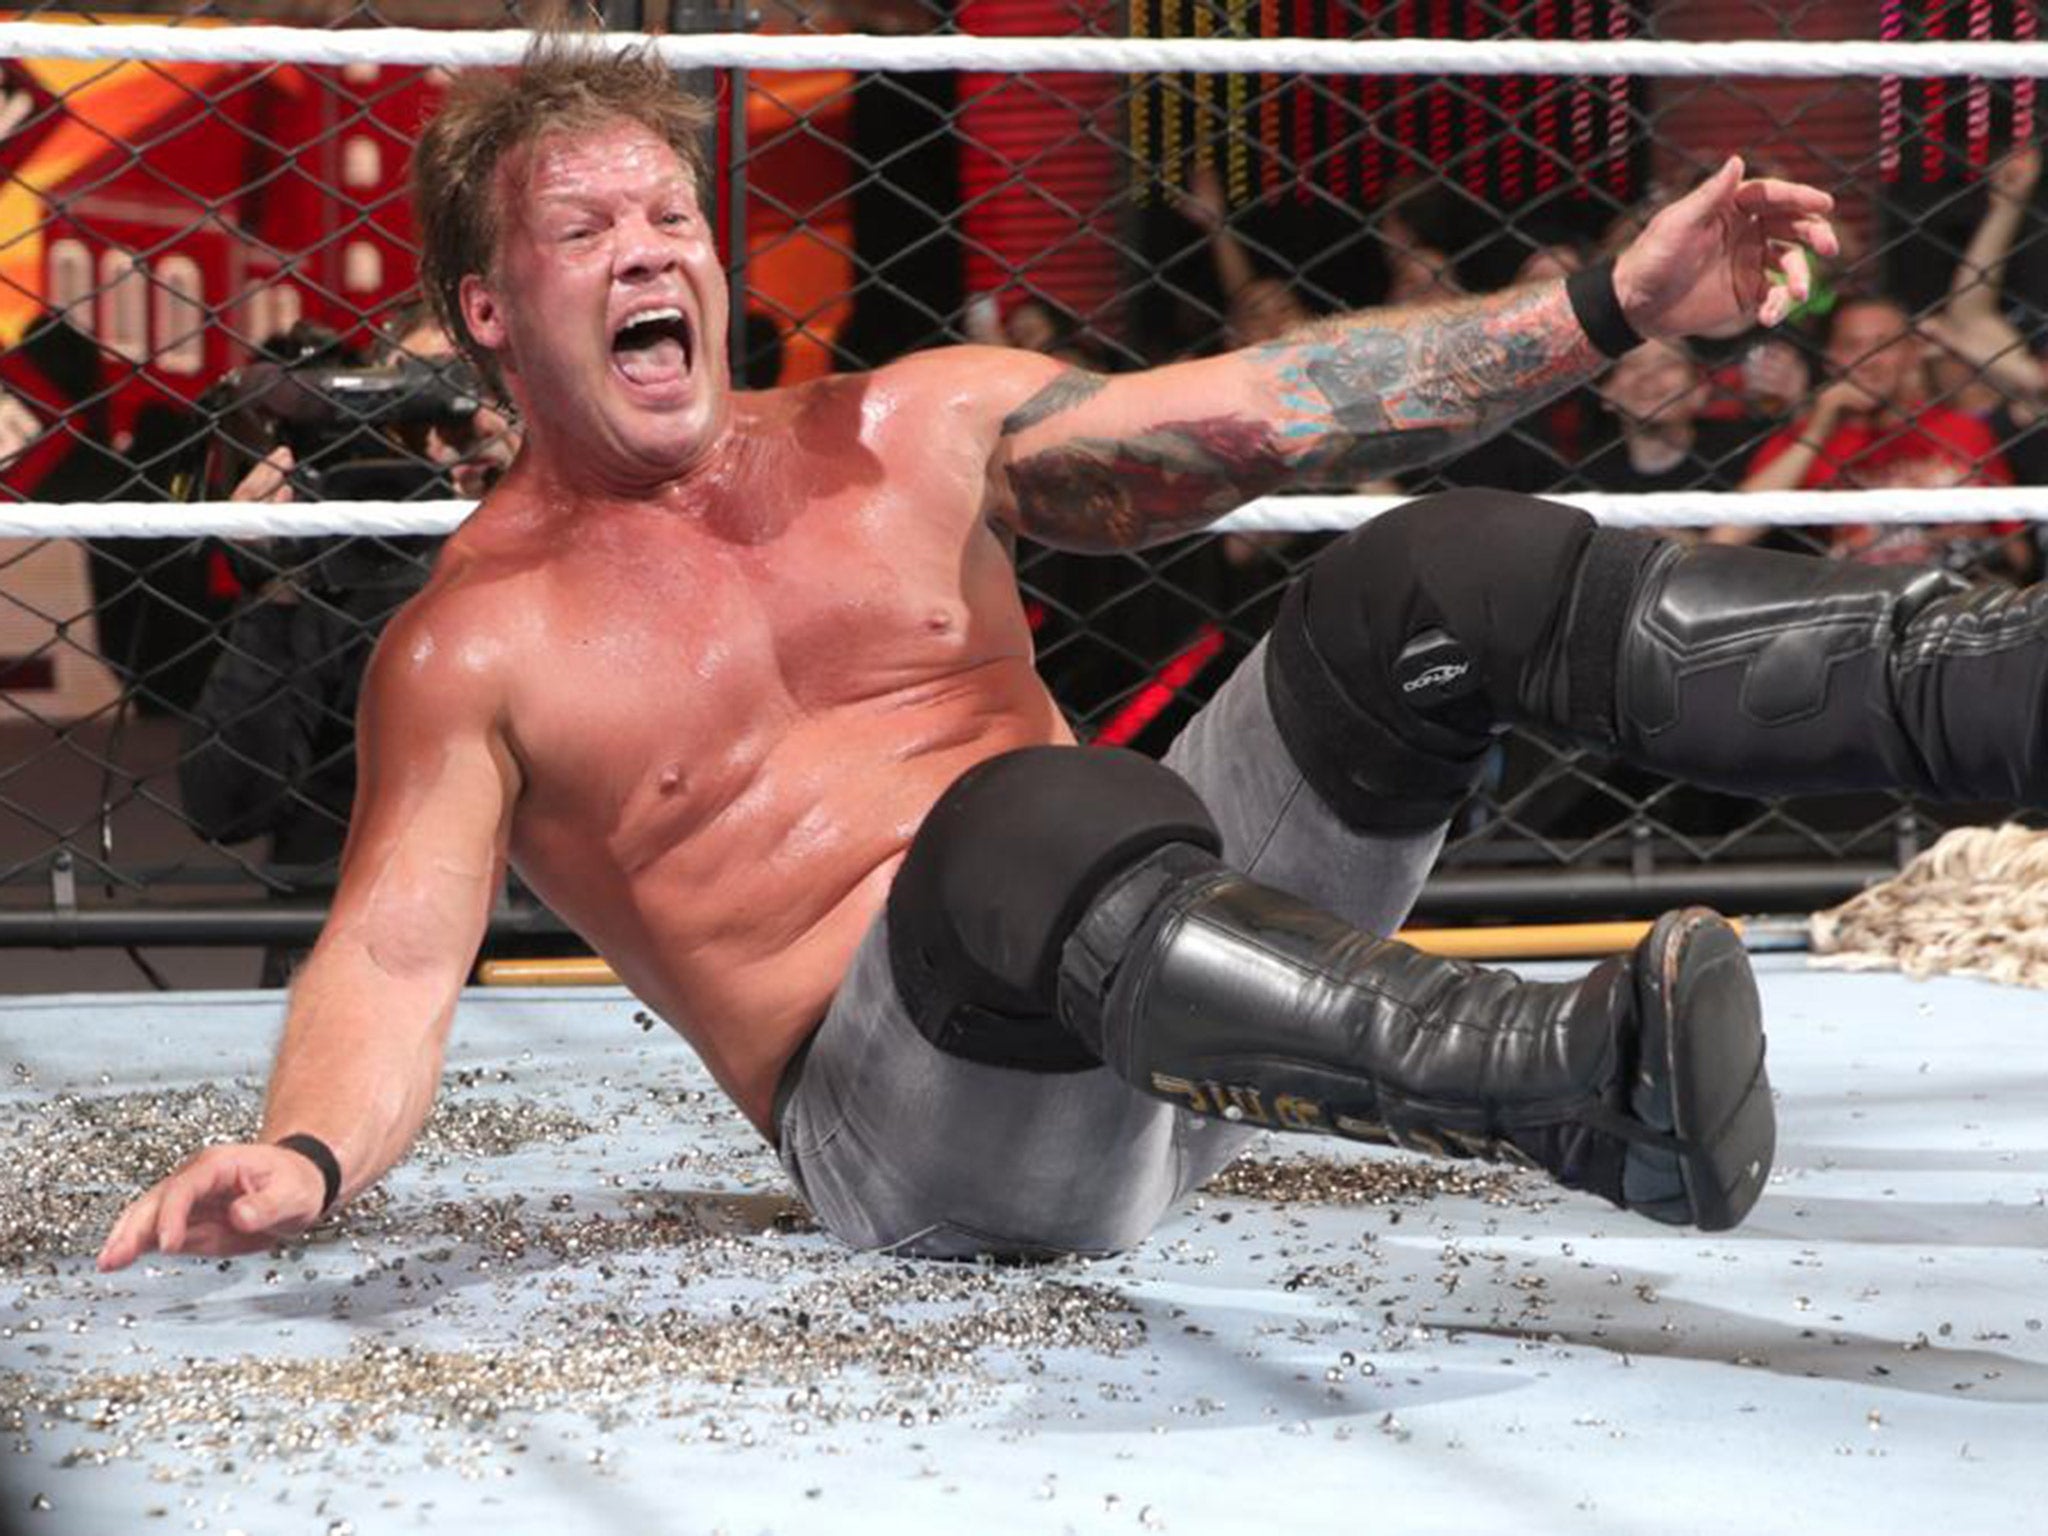 Chris Jericho lands back-first on thumbtacks